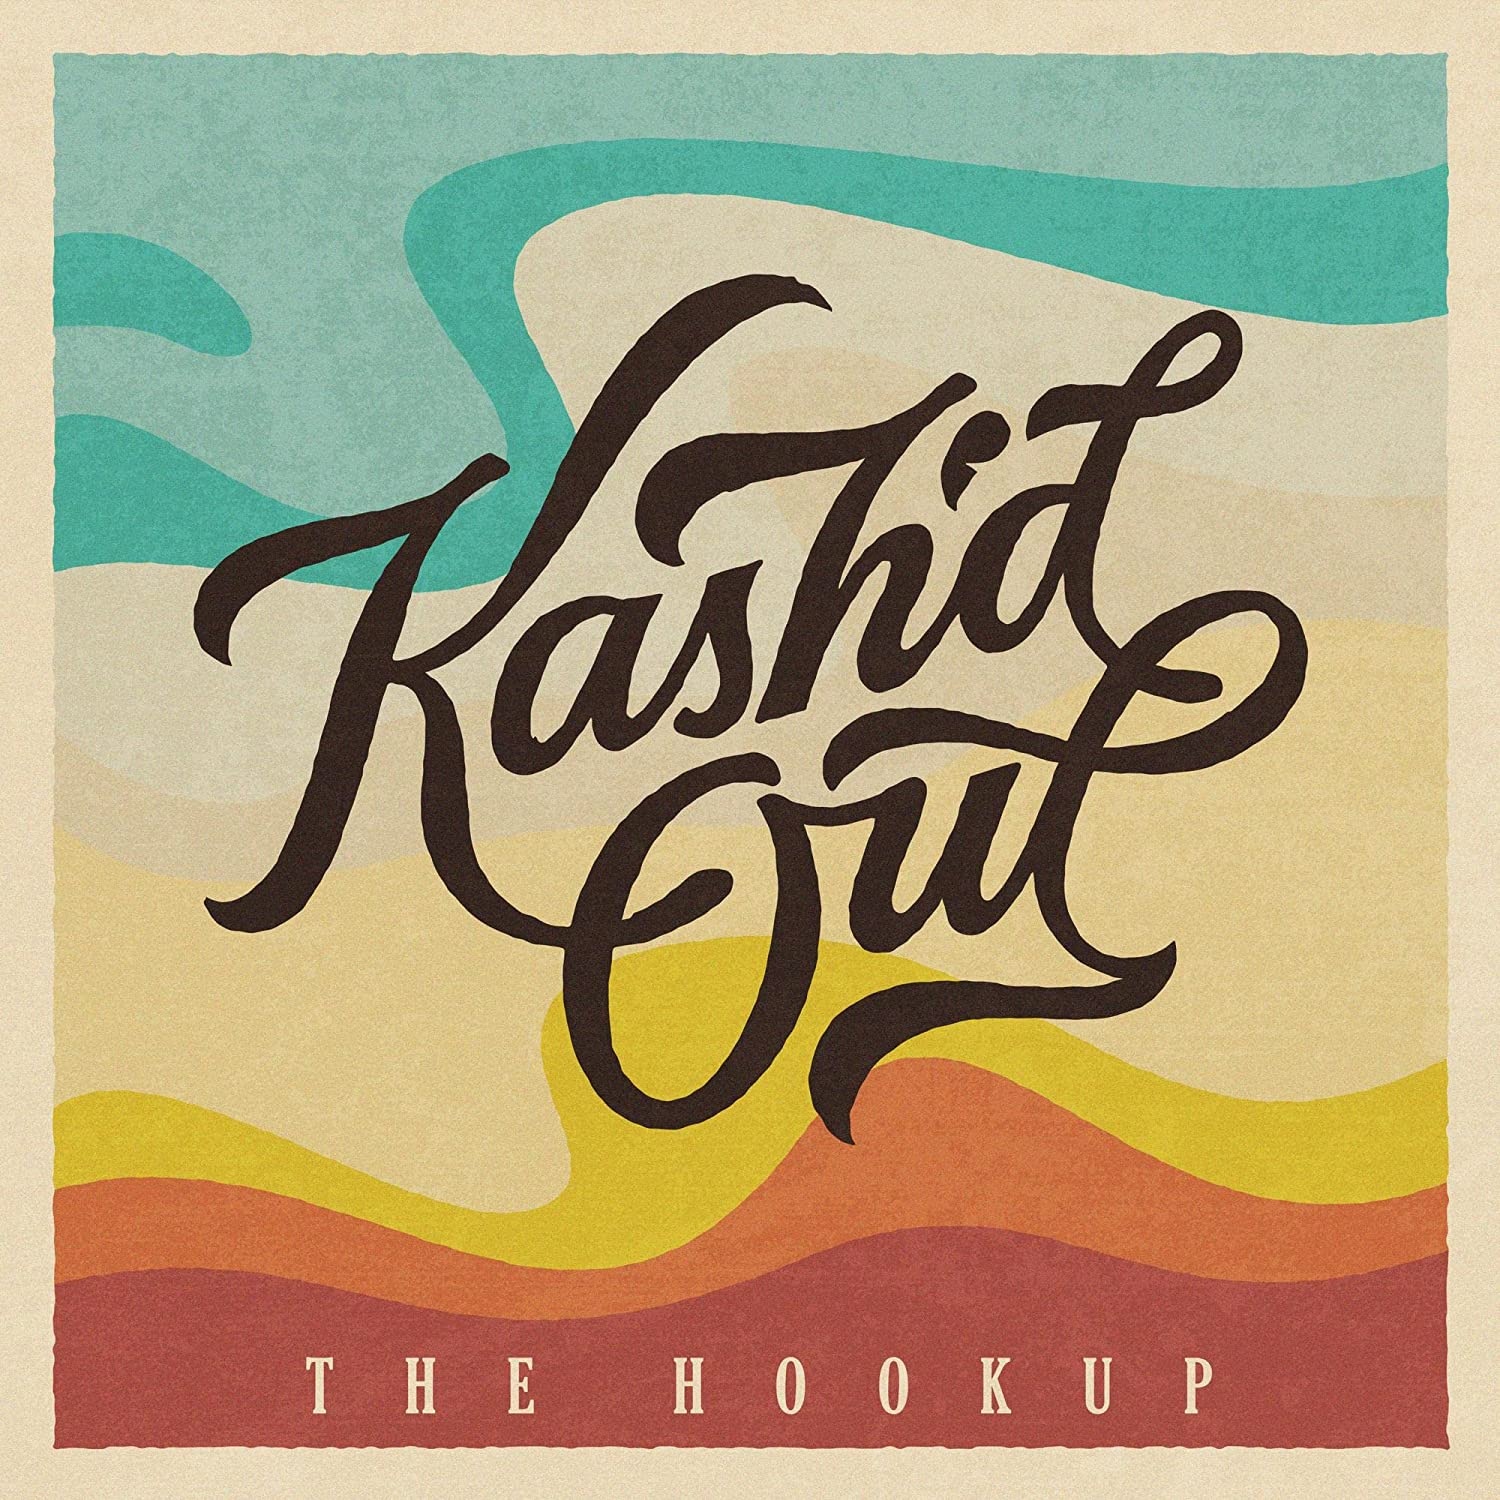 Kash'd Out - The Hookup vinyl cover